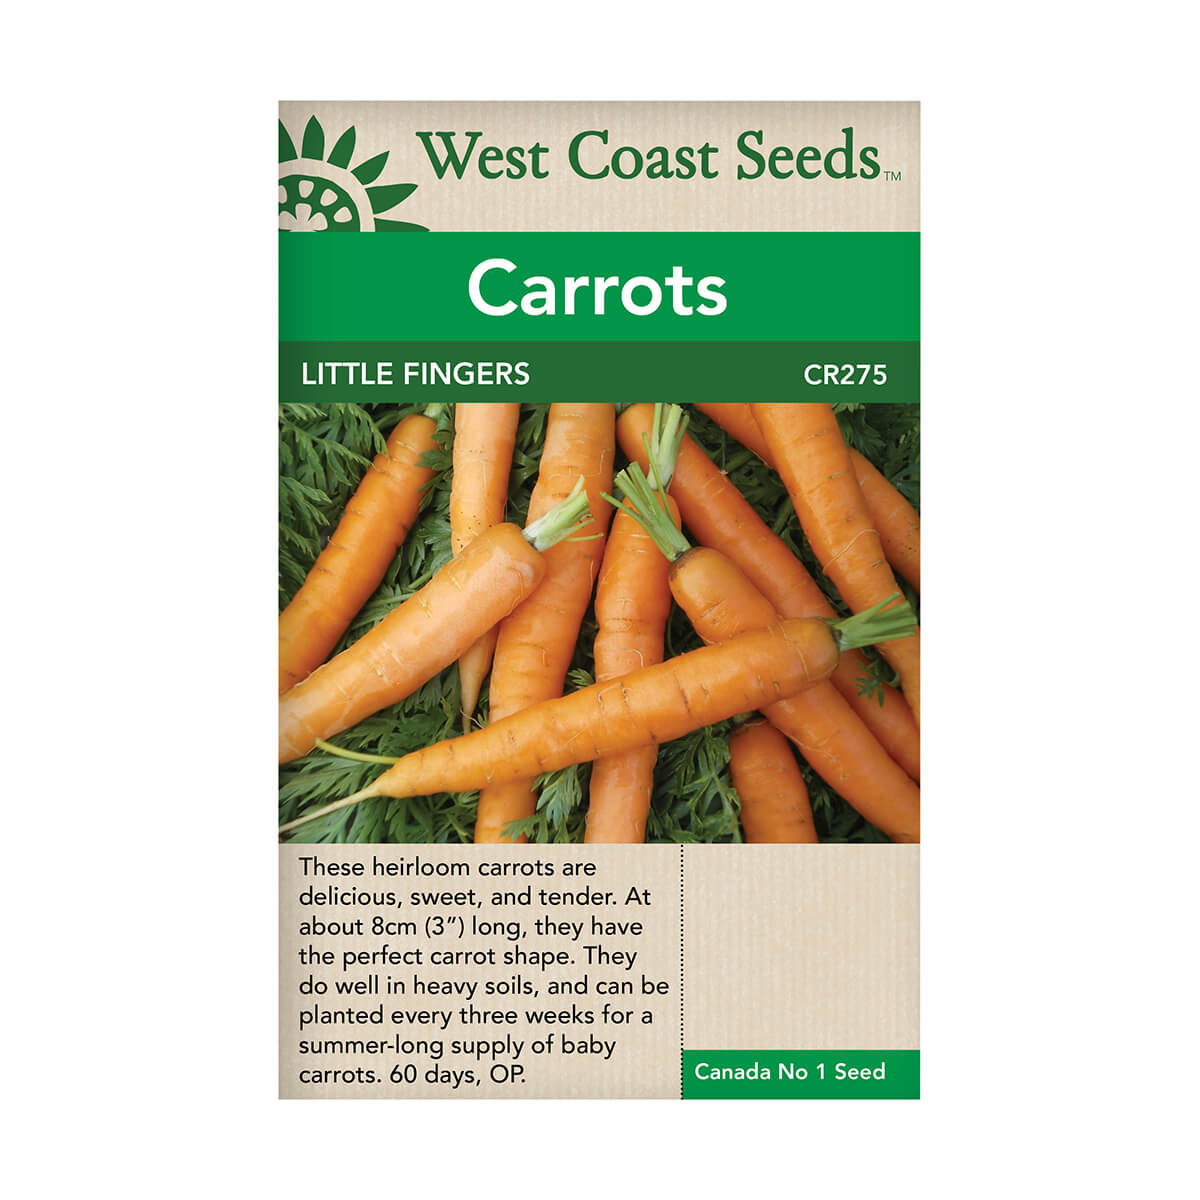 Little Fingers Carrot Seeds - approx. 891 seeds